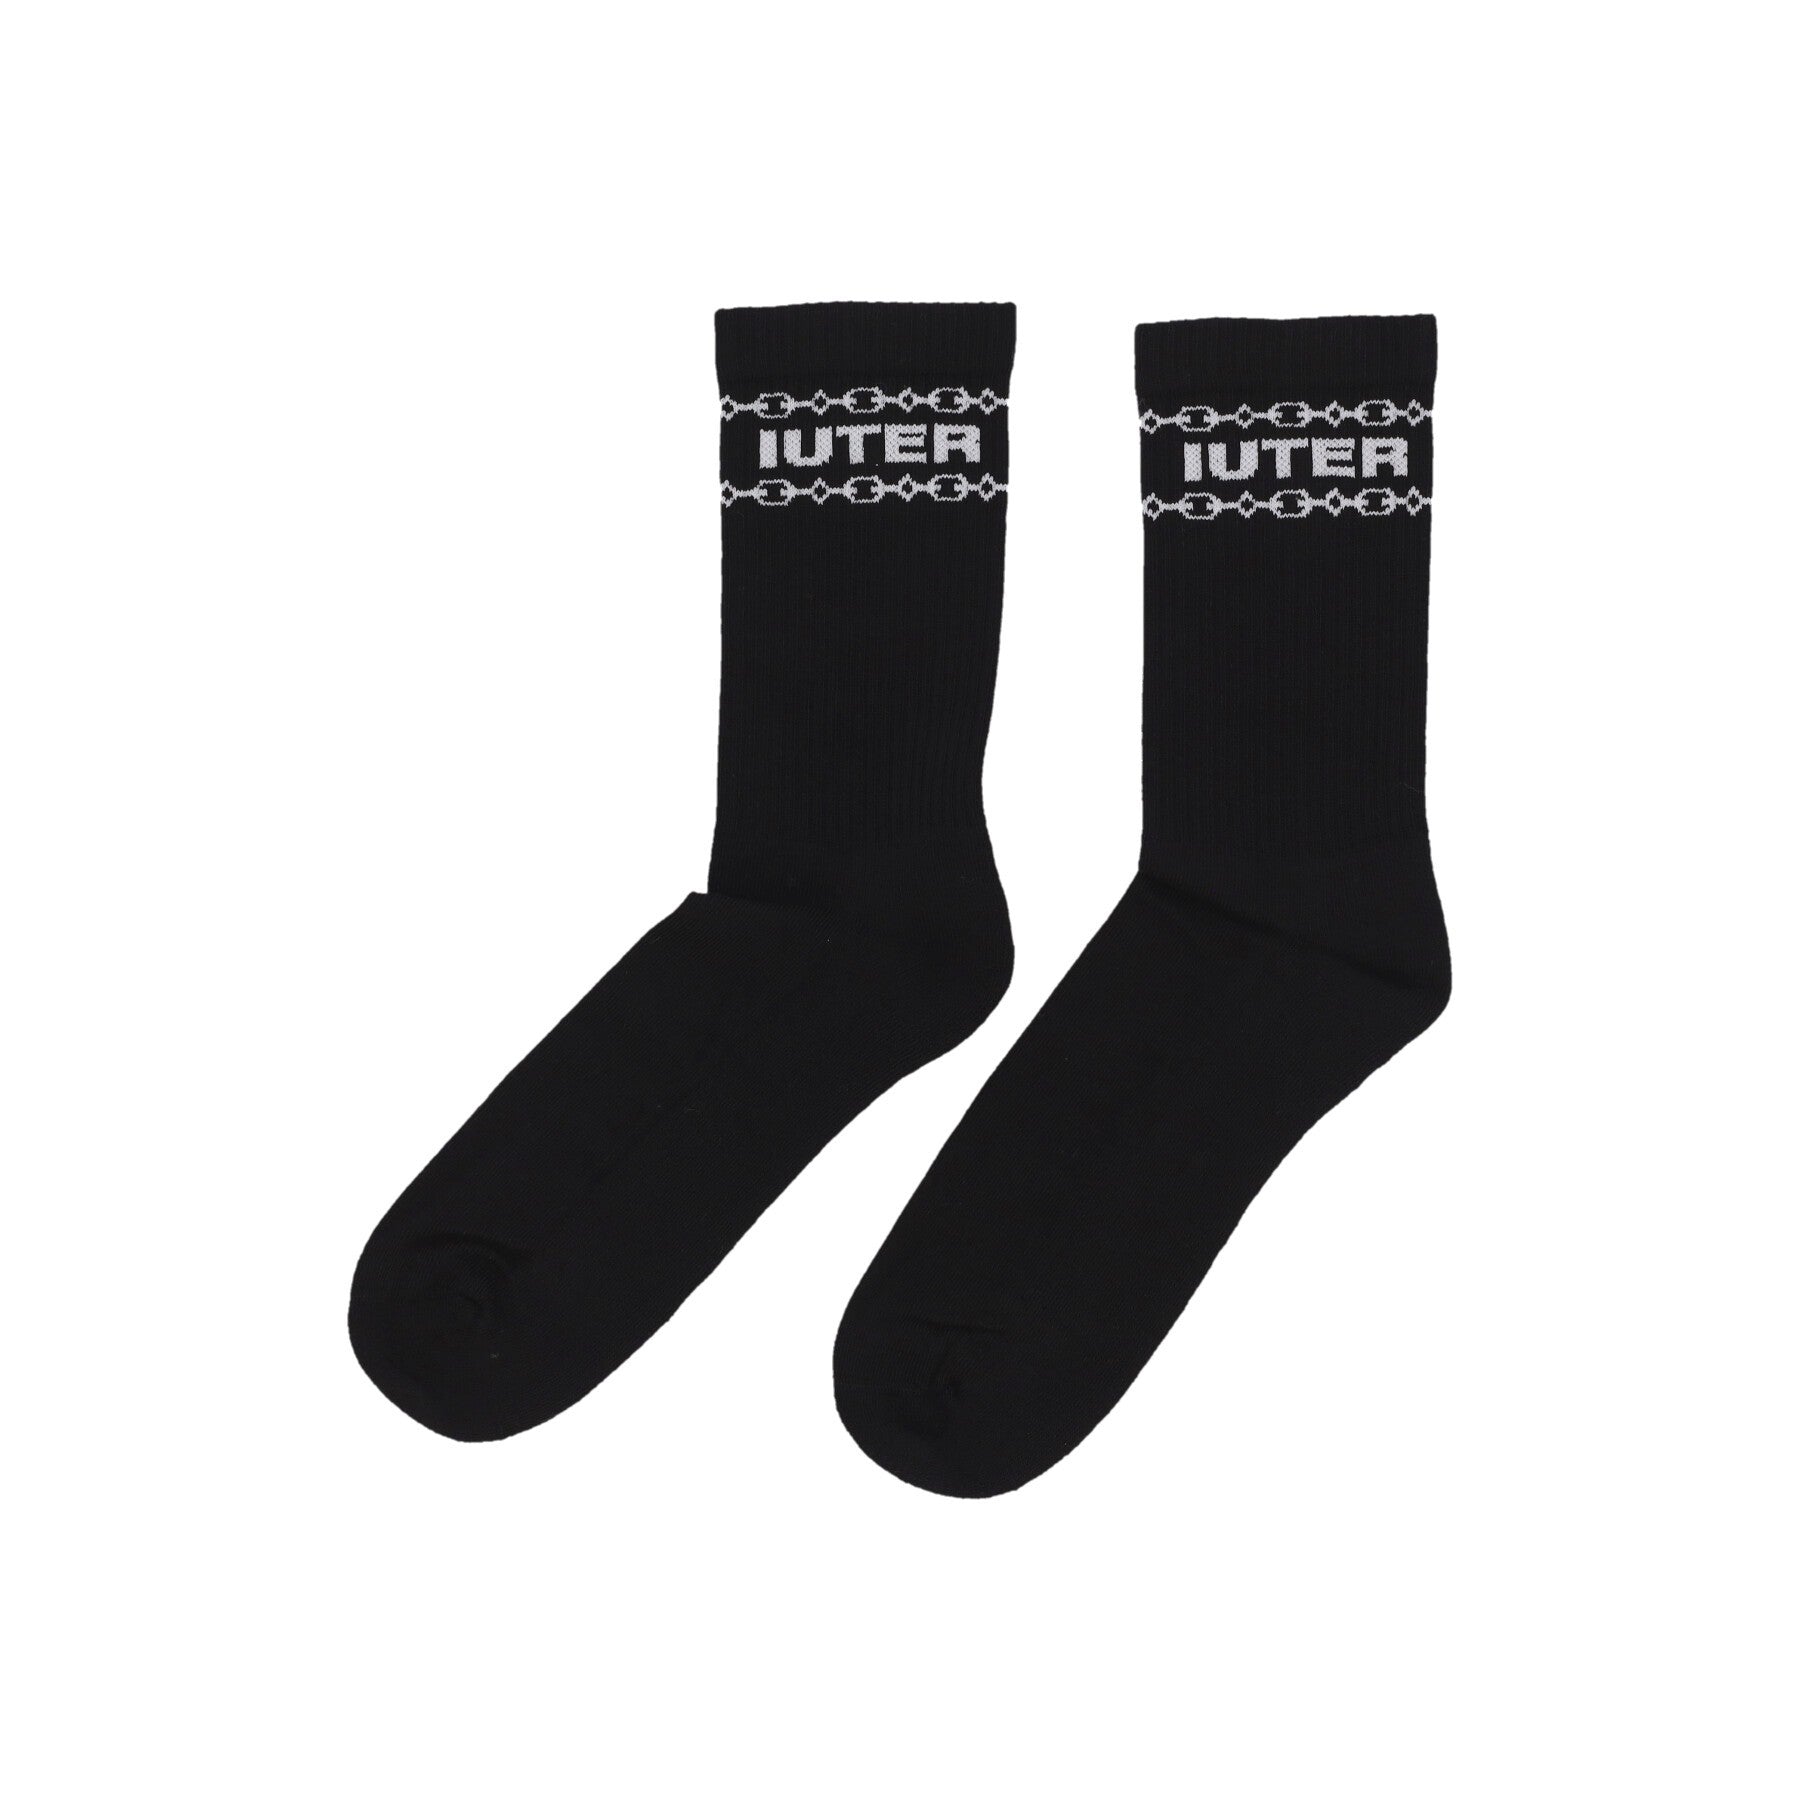 Iuter, Calza Media Uomo Chain Socks, Black